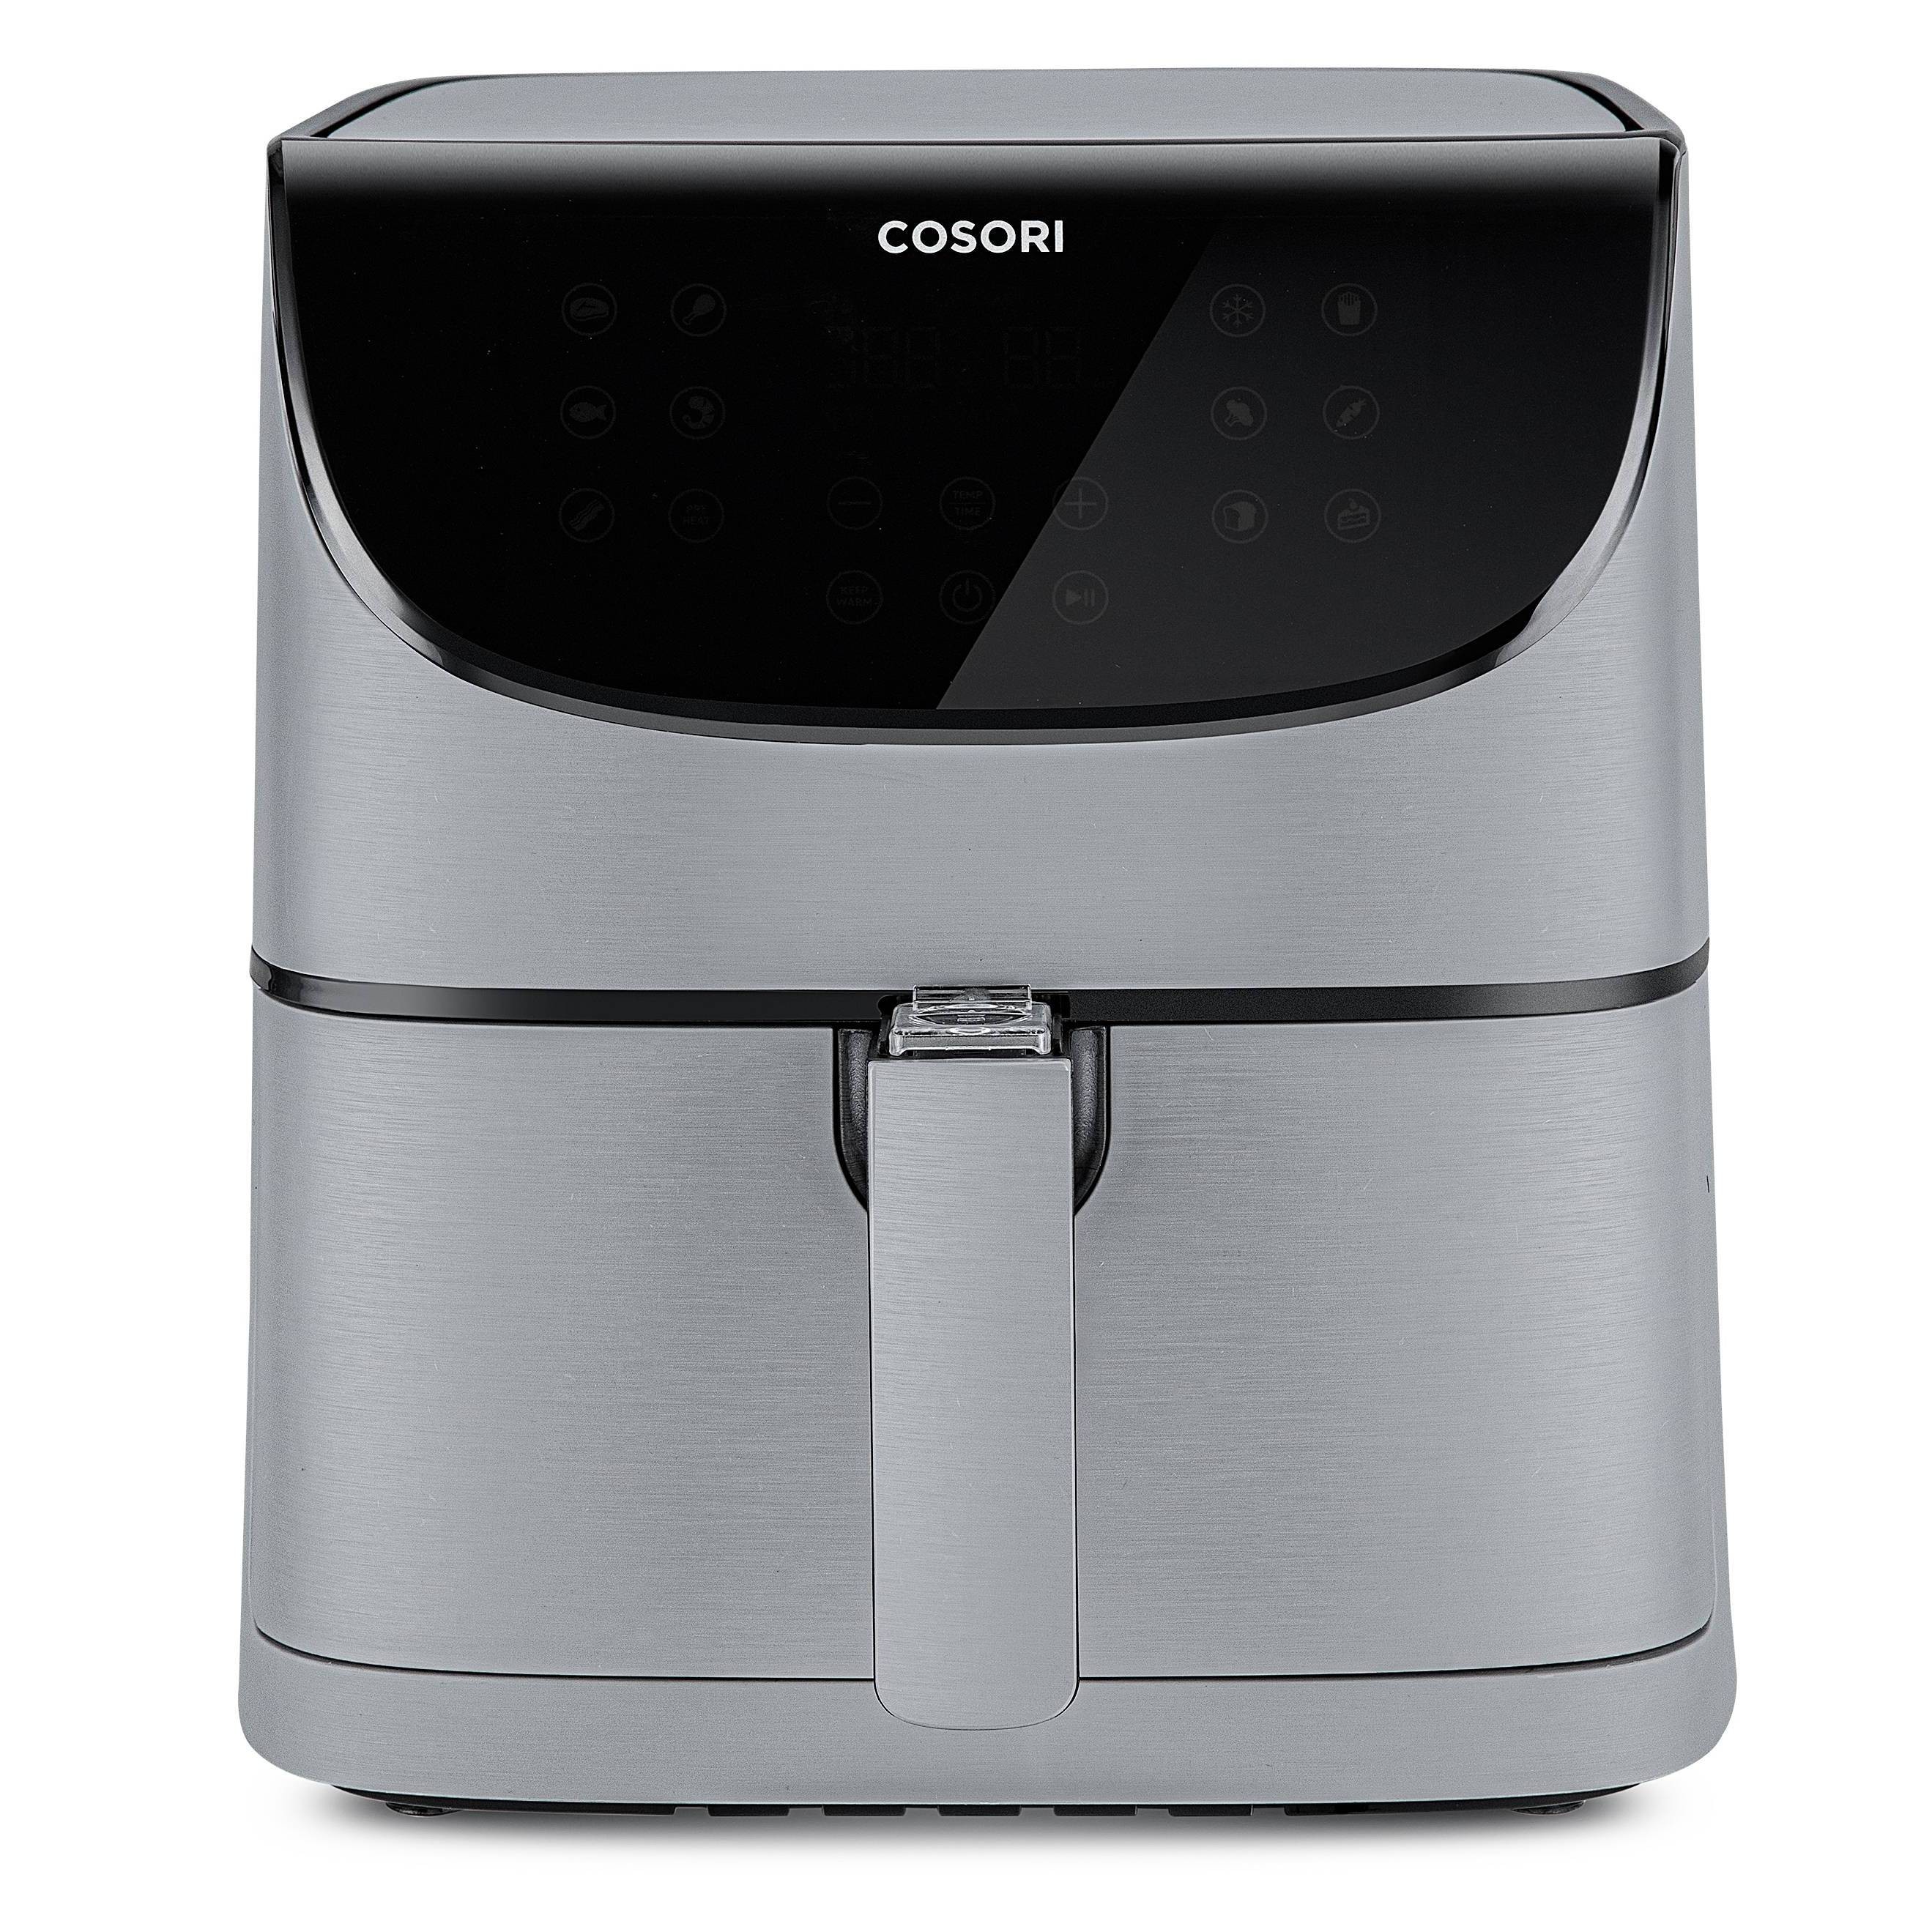 Cosori - 5.8-Quart Premium Air Fryer with Skewer Rack Set - White